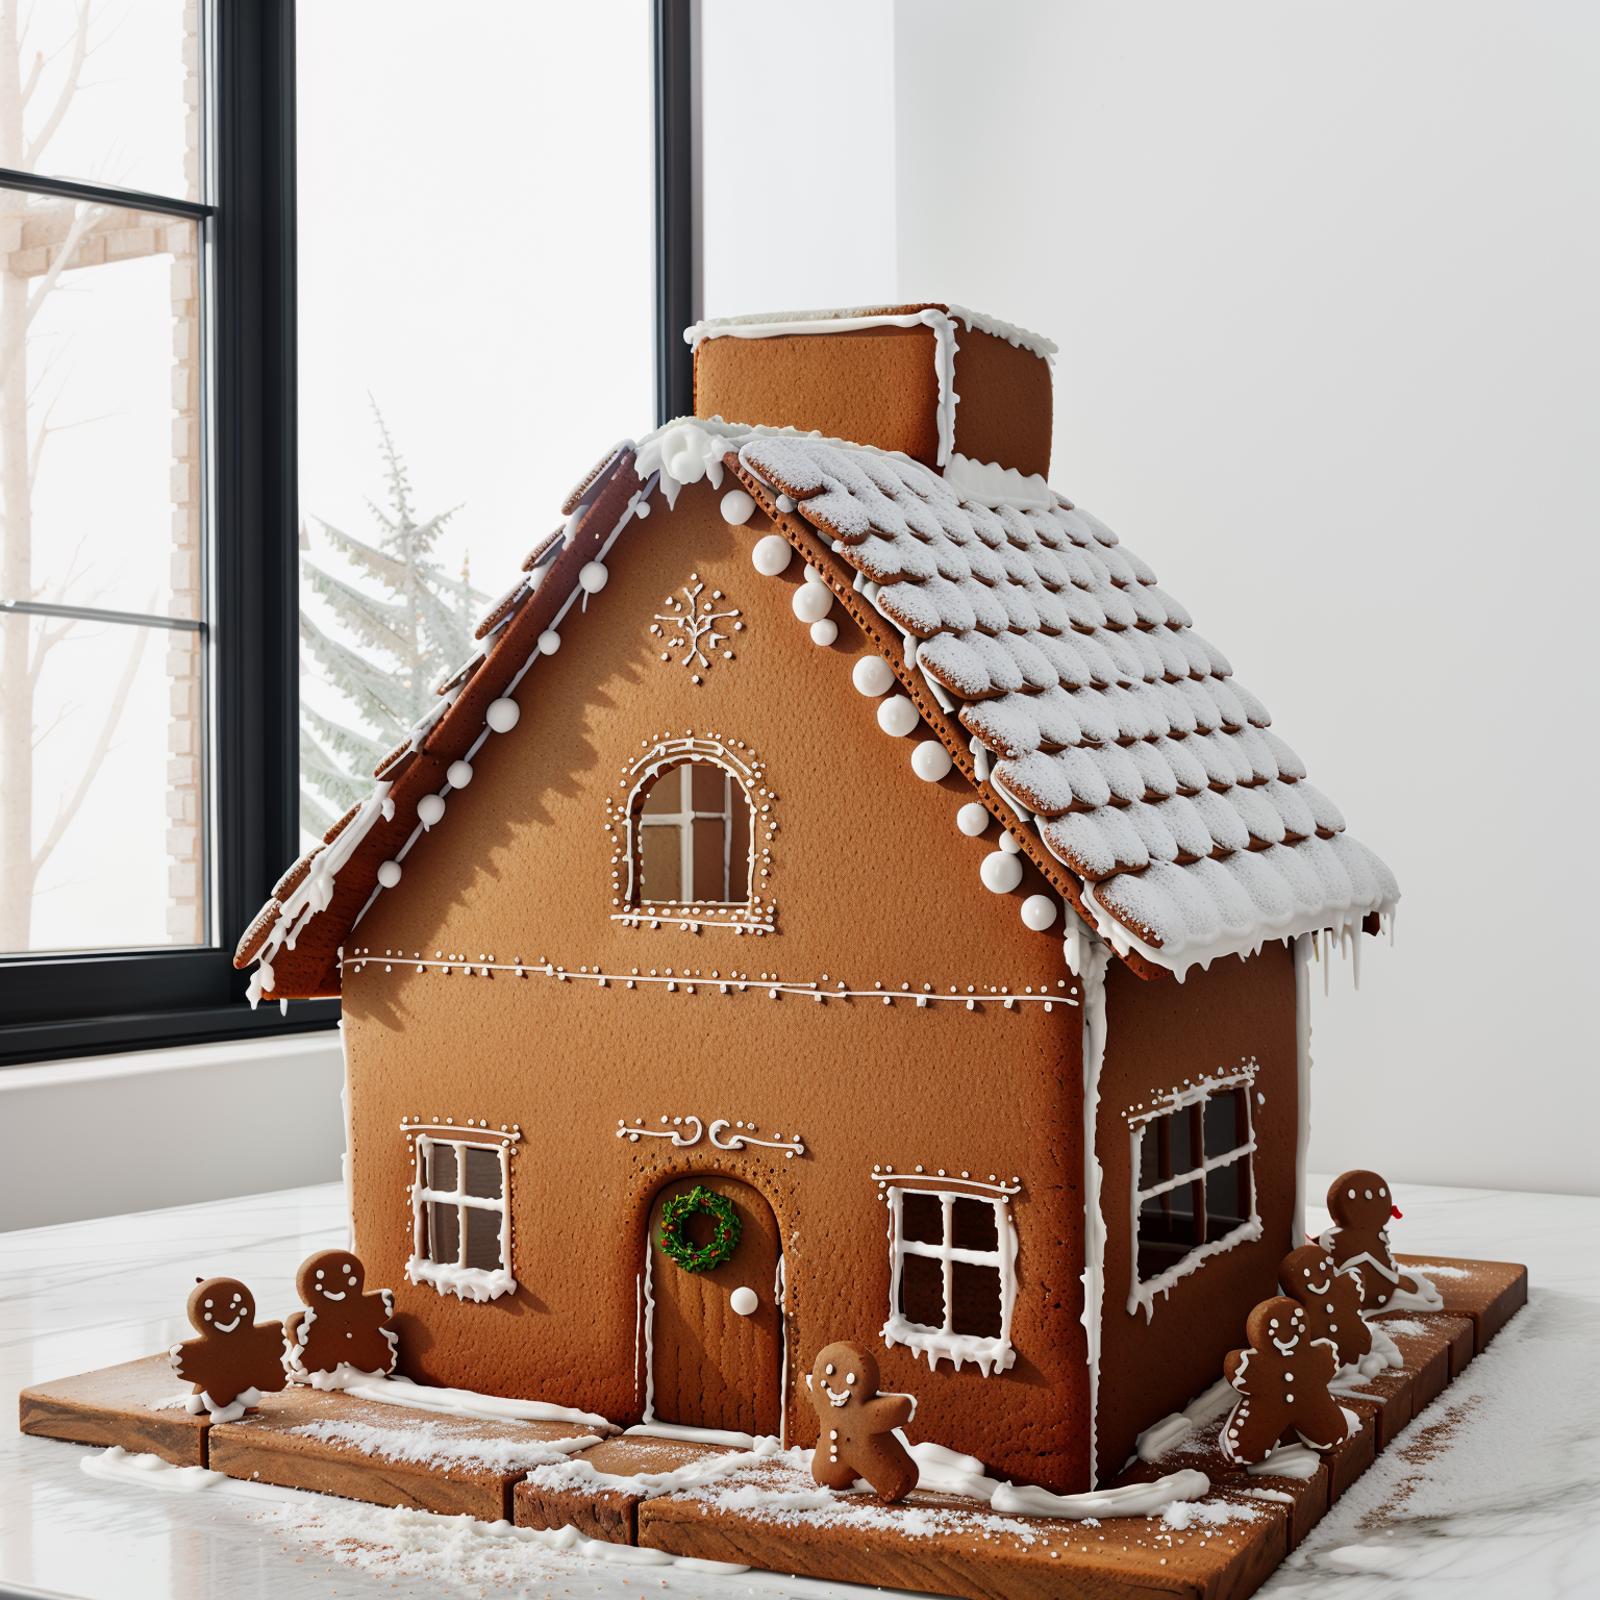 Gingerbread Houses image by eurotaku